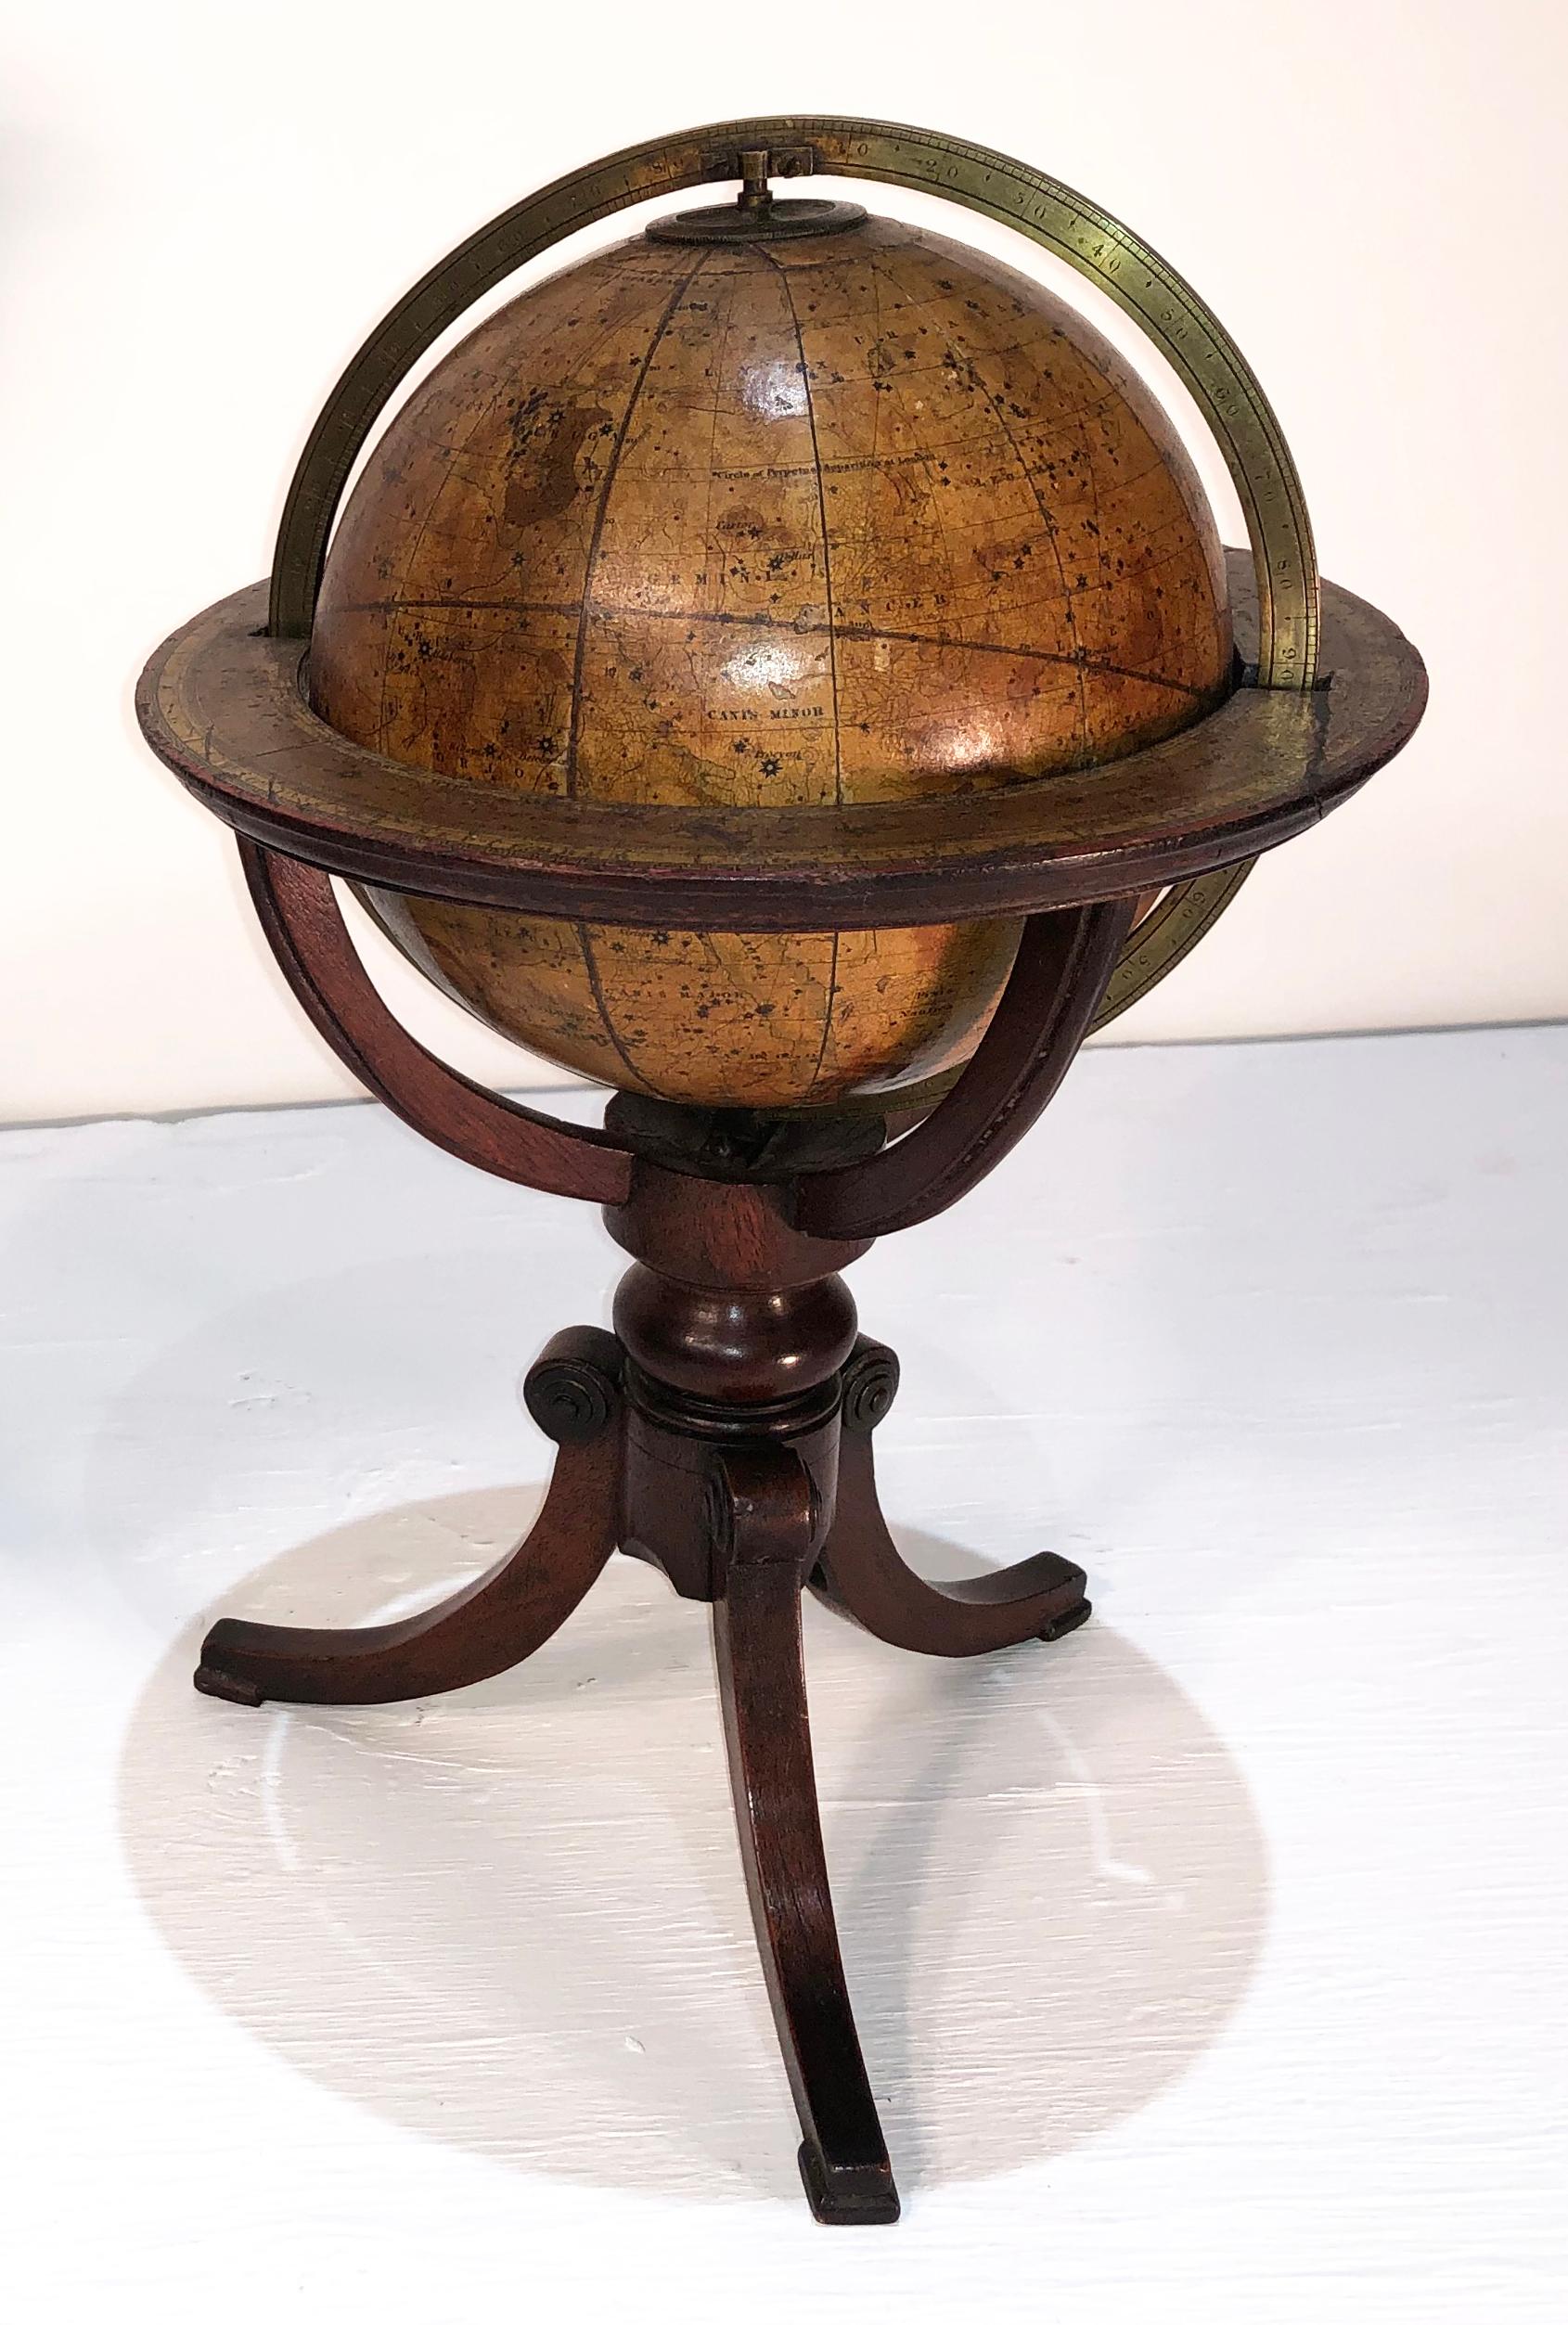 Regency Pair of Miniature 19th Century Globes, Terrestrial and Celestial